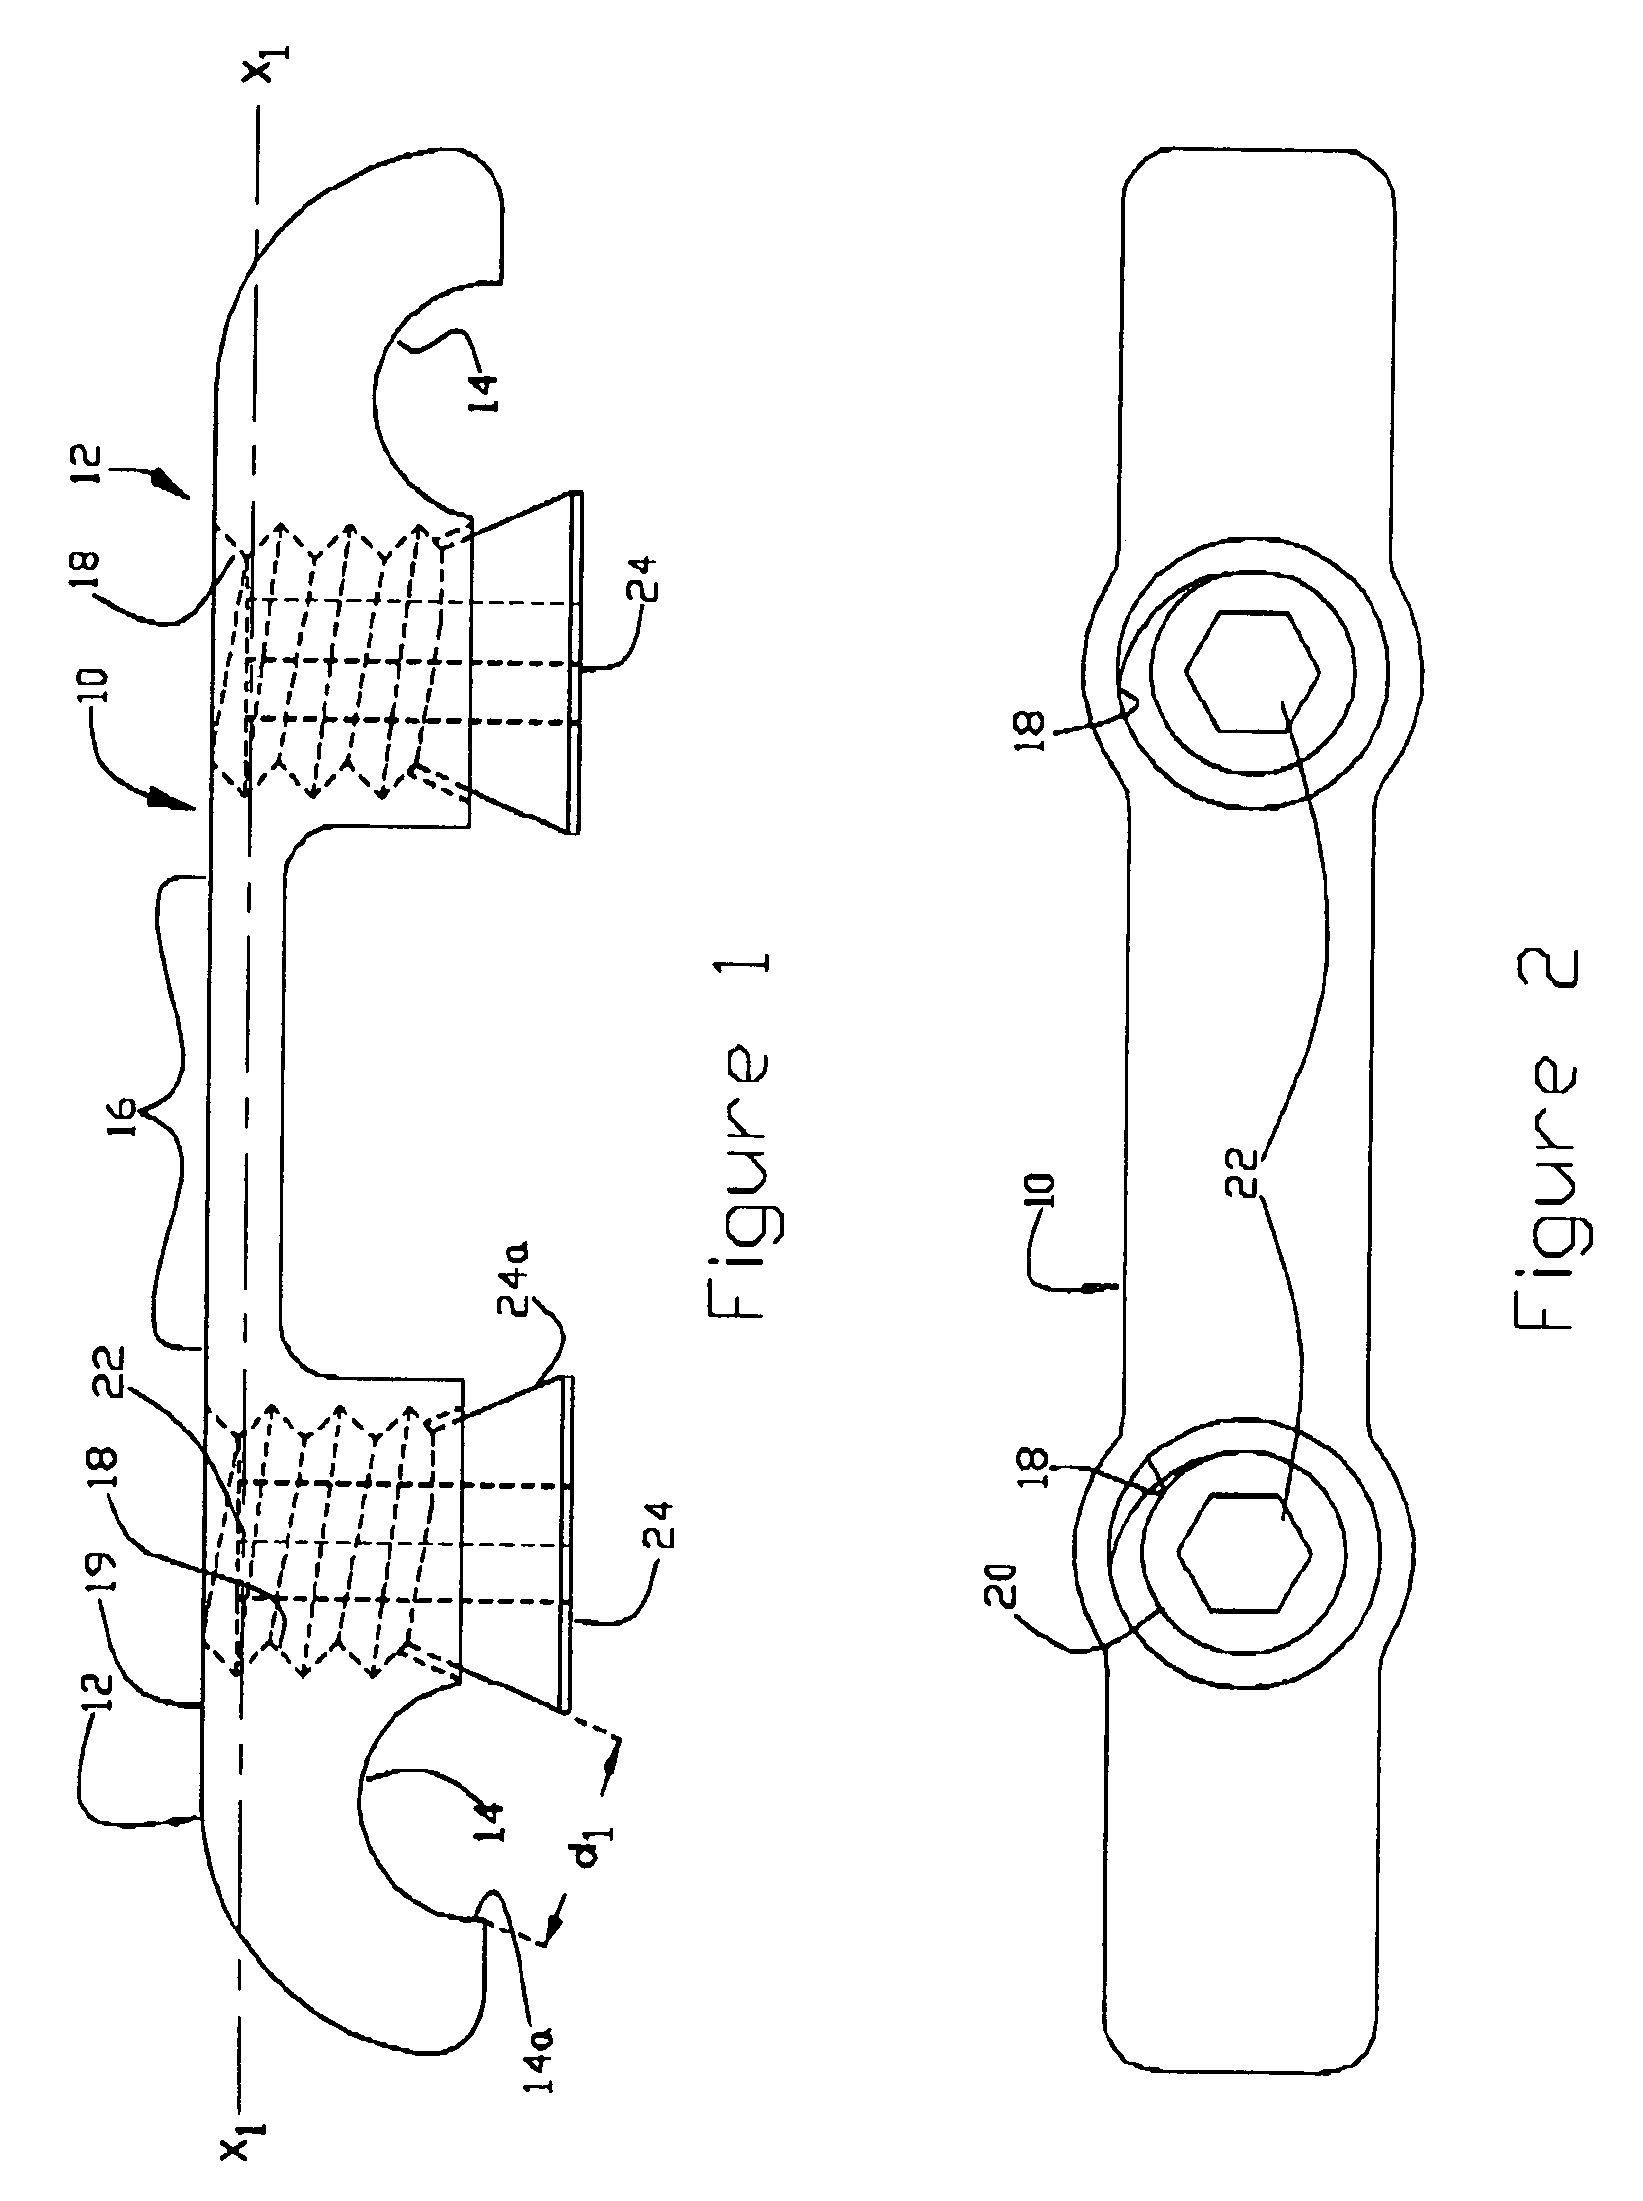 Transverse connector system